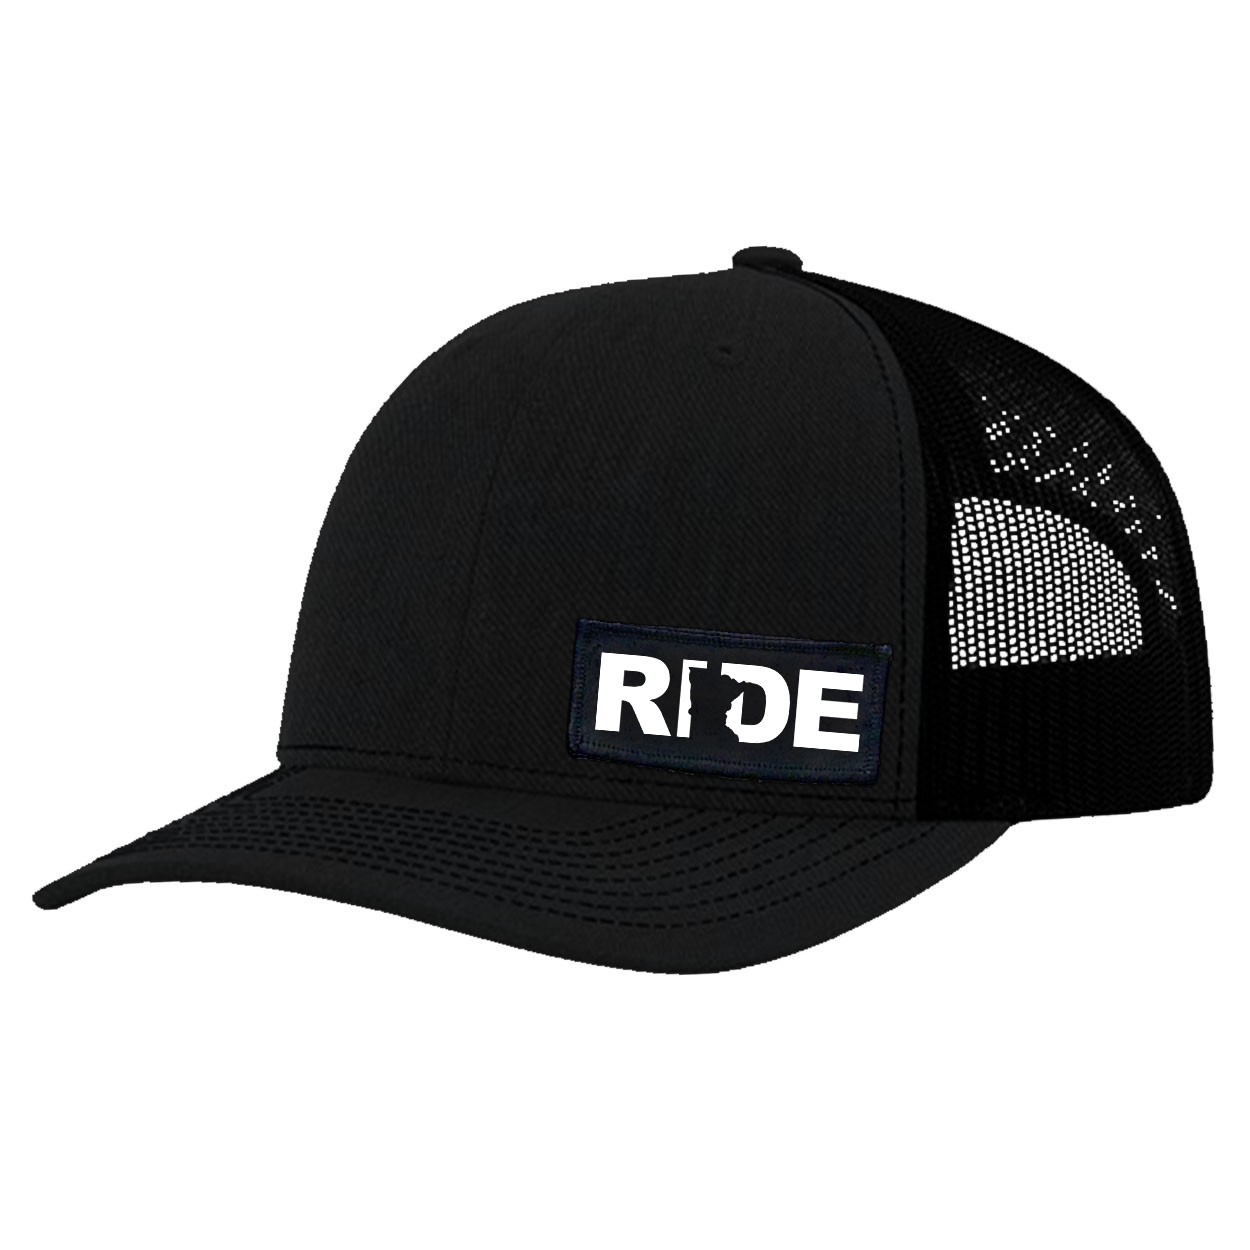 Ride Minnesota Night Out Youth Patch Mesh Snapback Hat Black (White Logo)